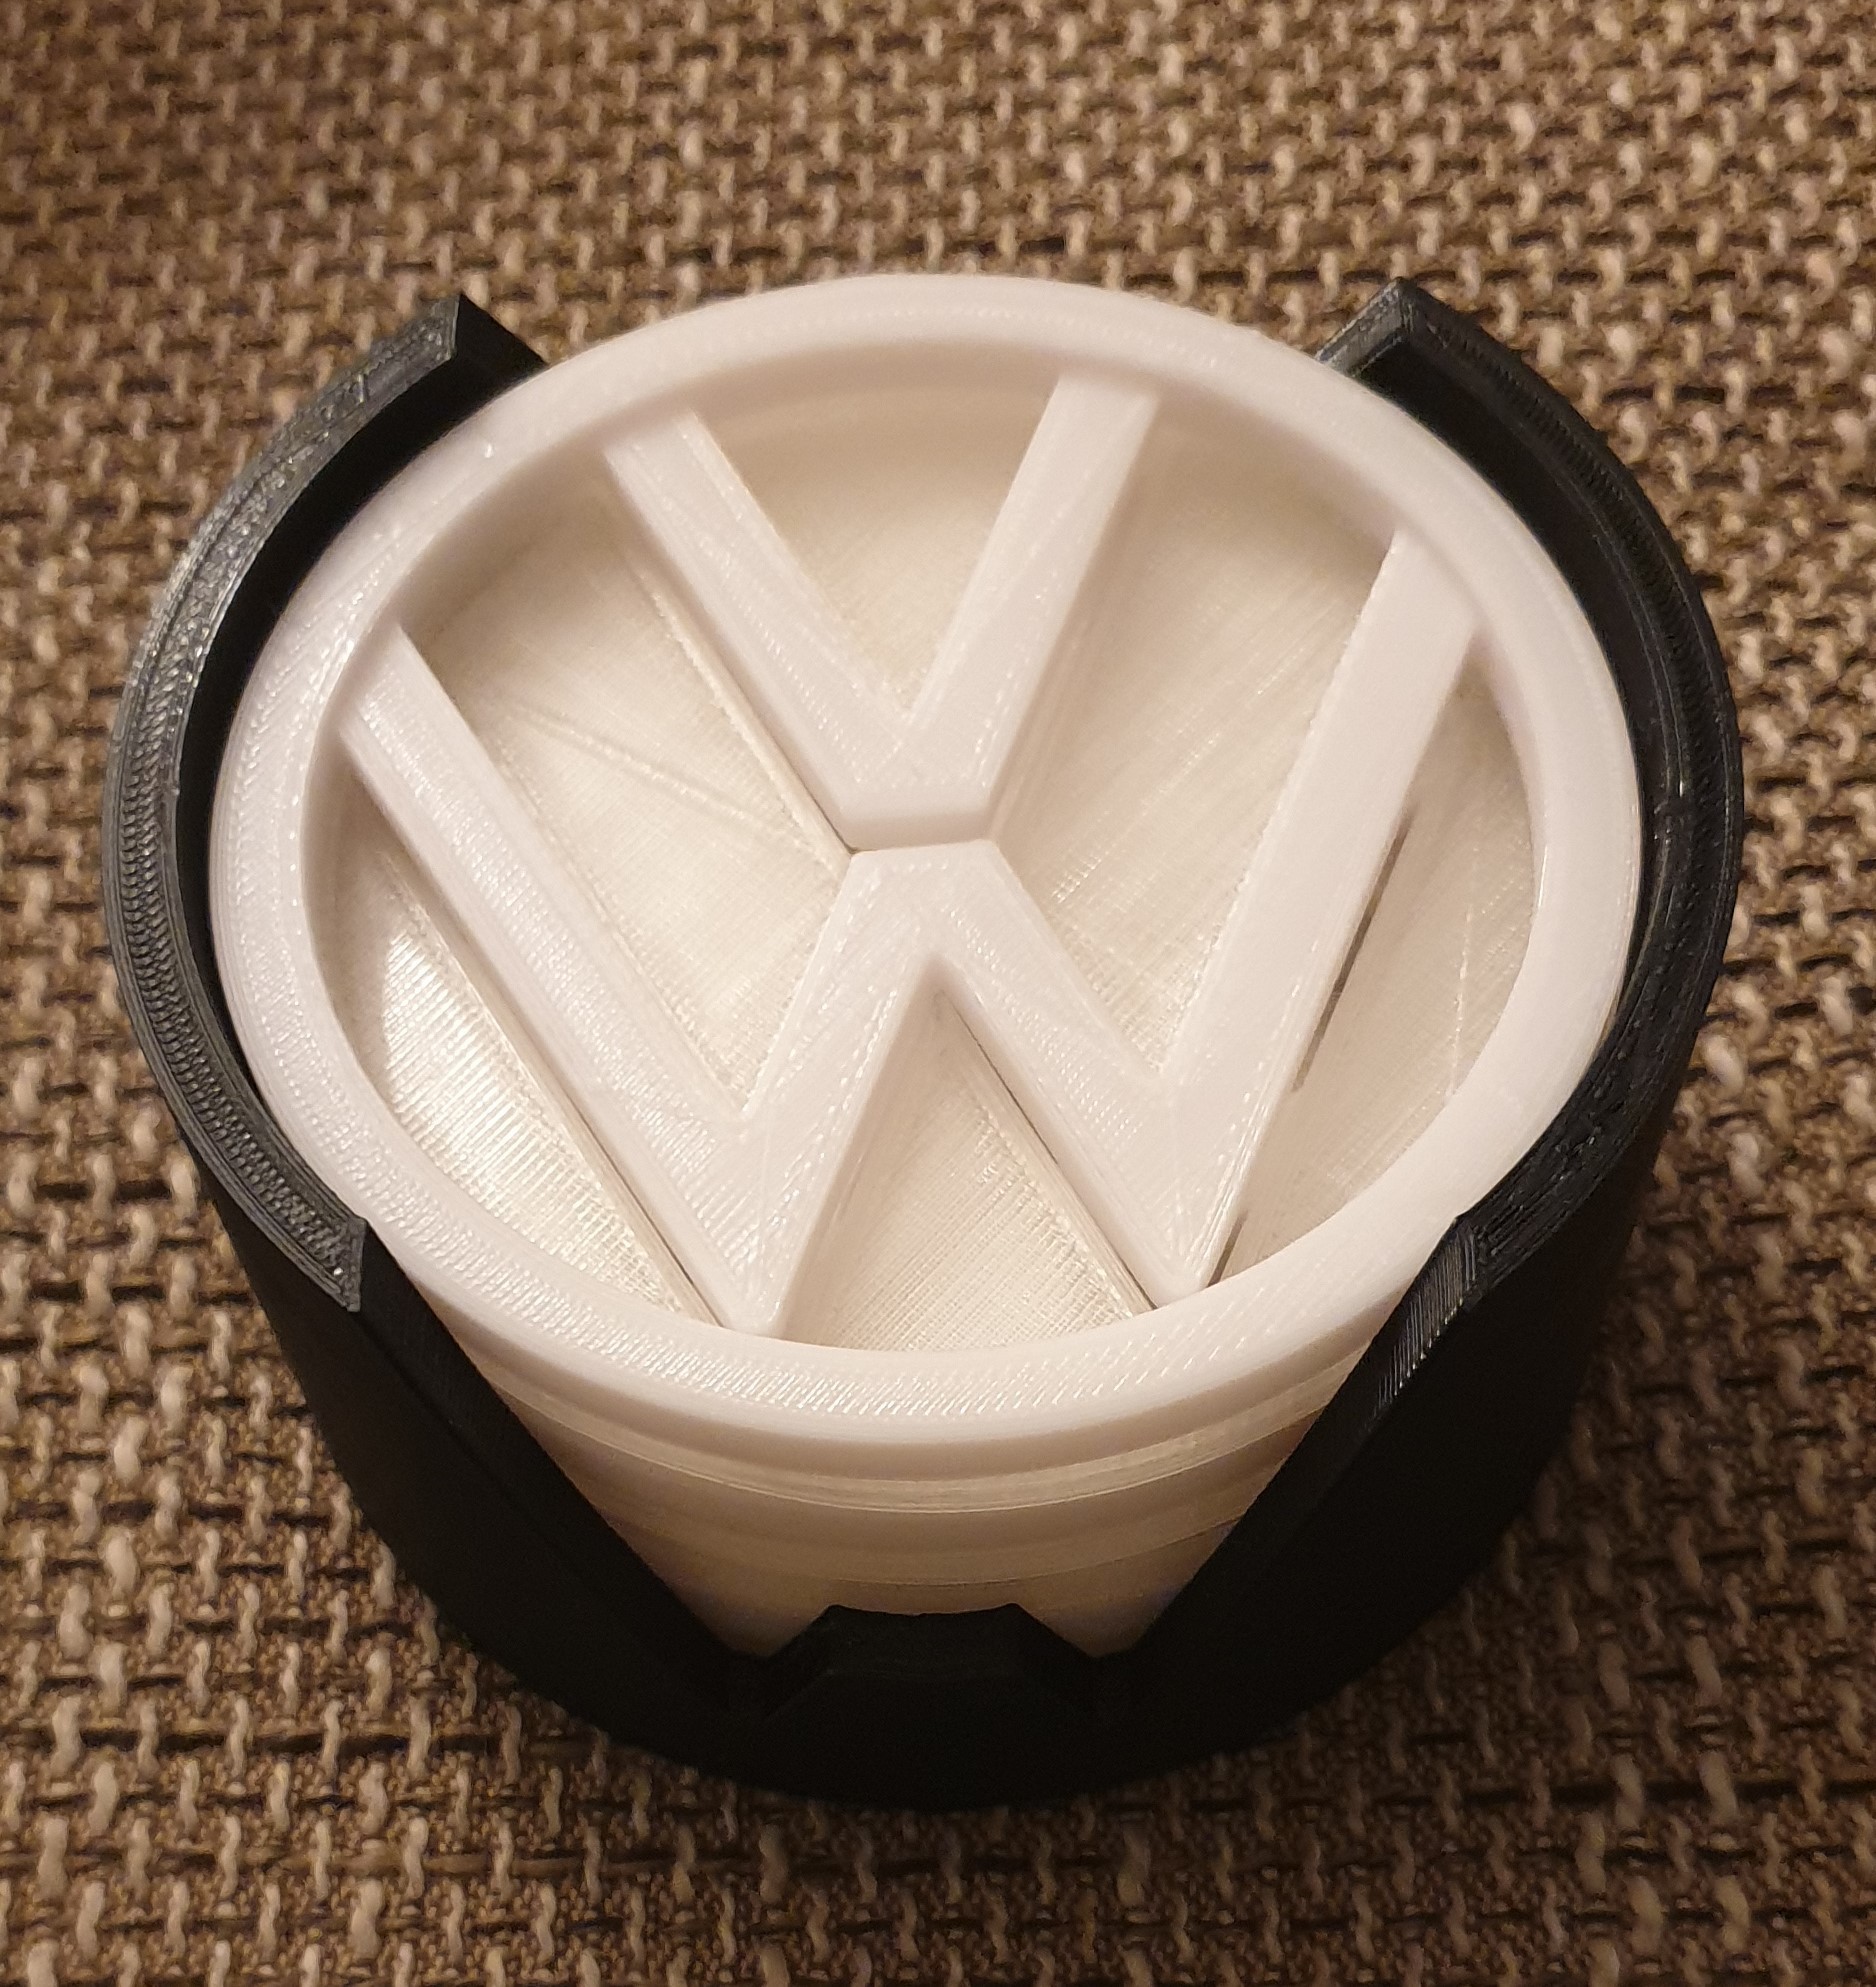 VW Coaster set (new logo)